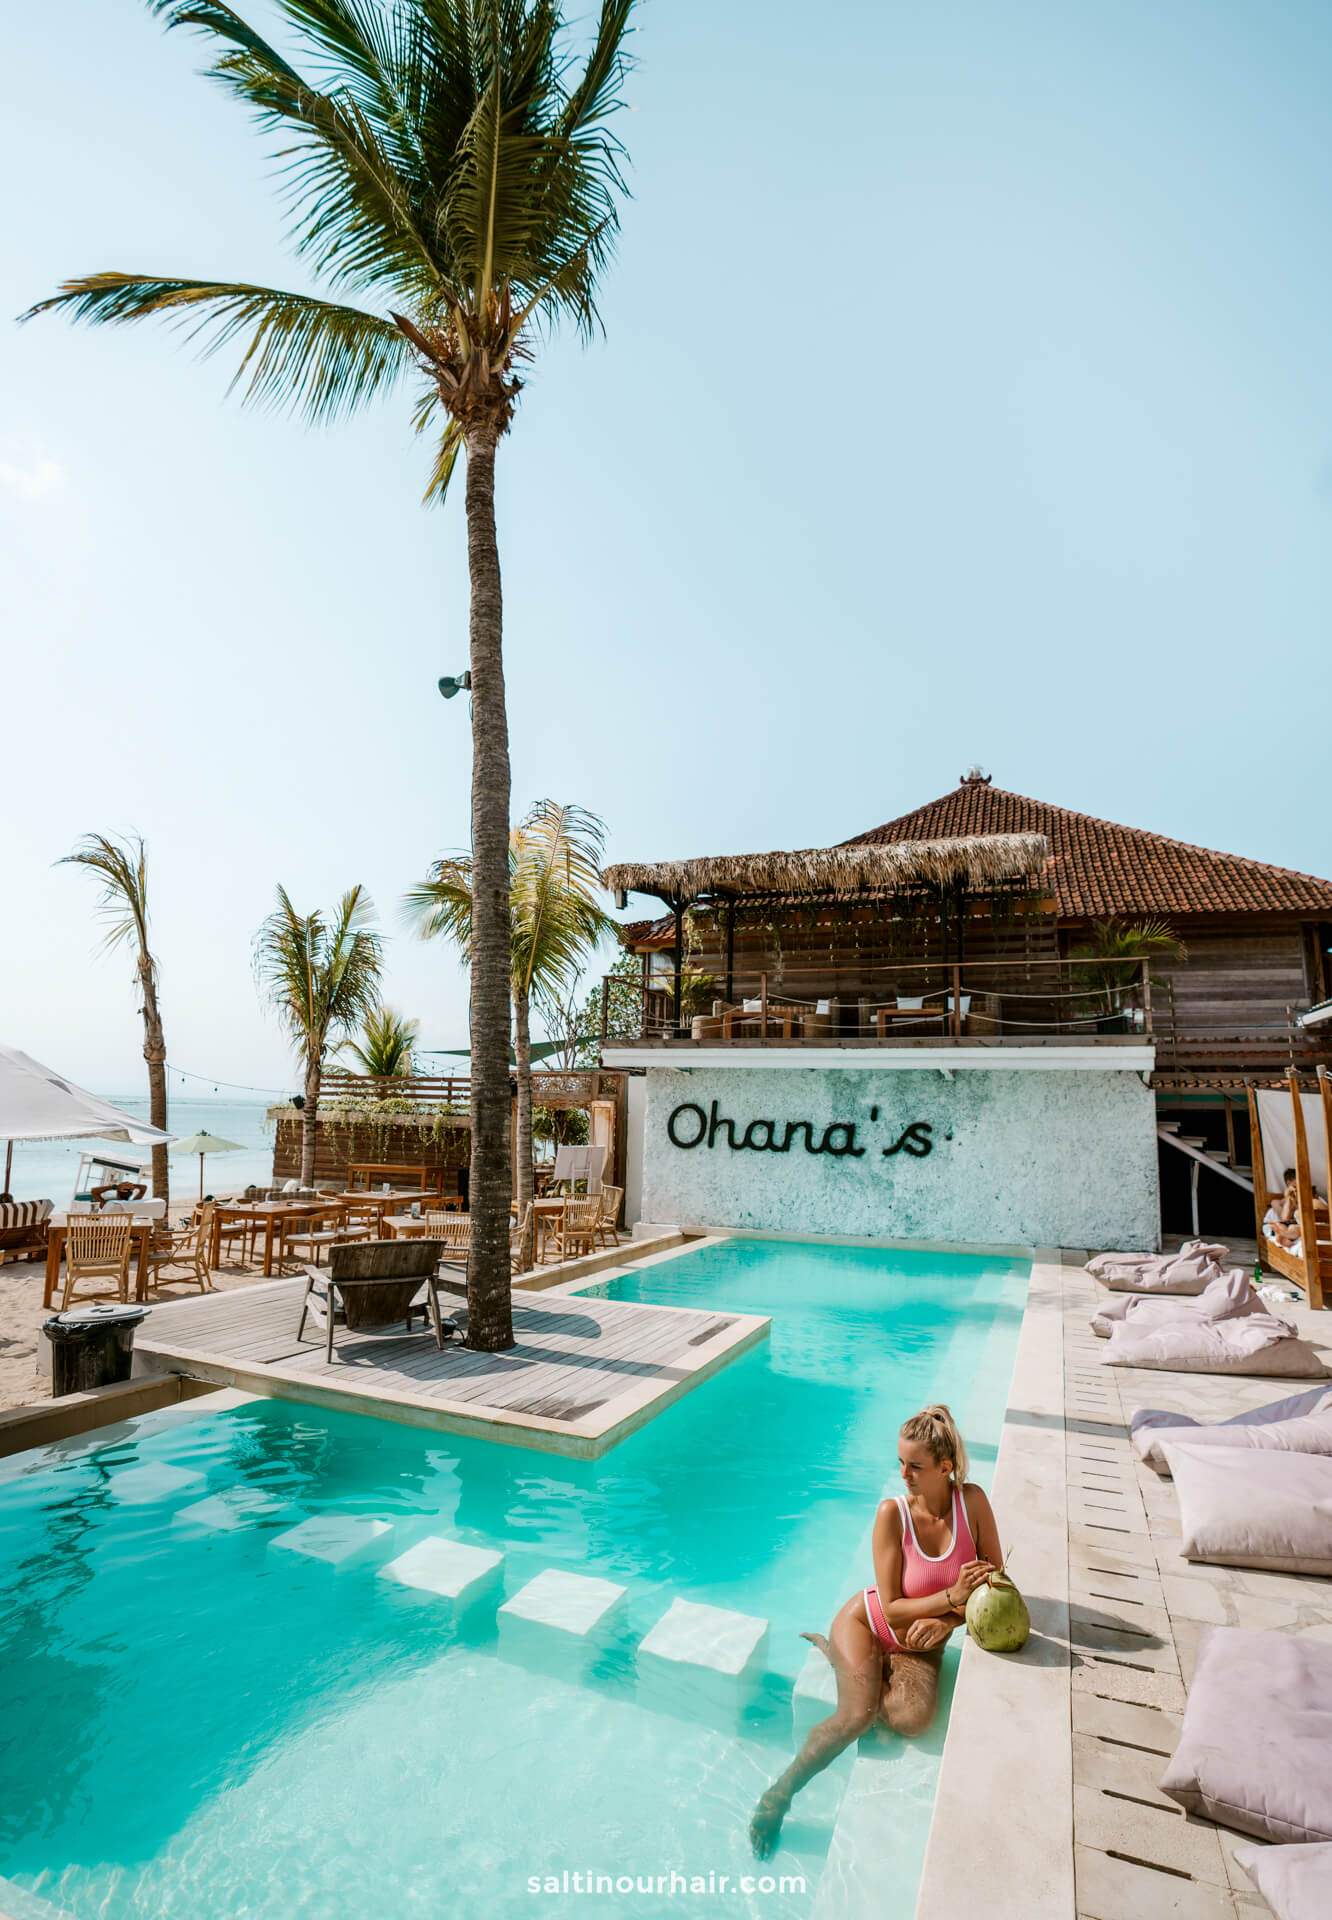 Bali honeymoon relax beach club